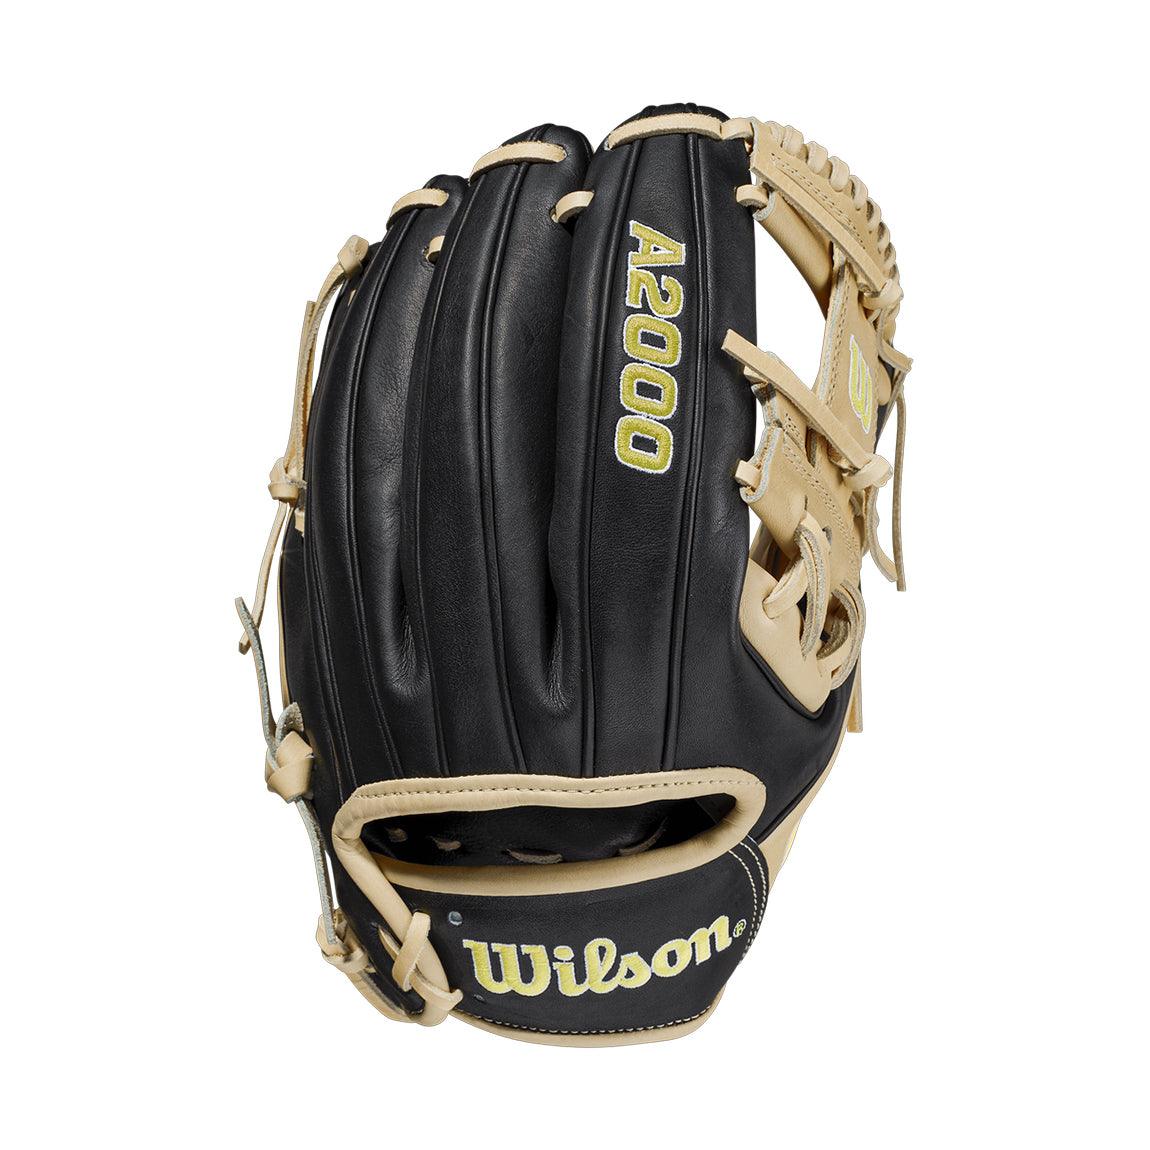 A2000 1786 11.5" Infield Baseball Glove - Sports Excellence